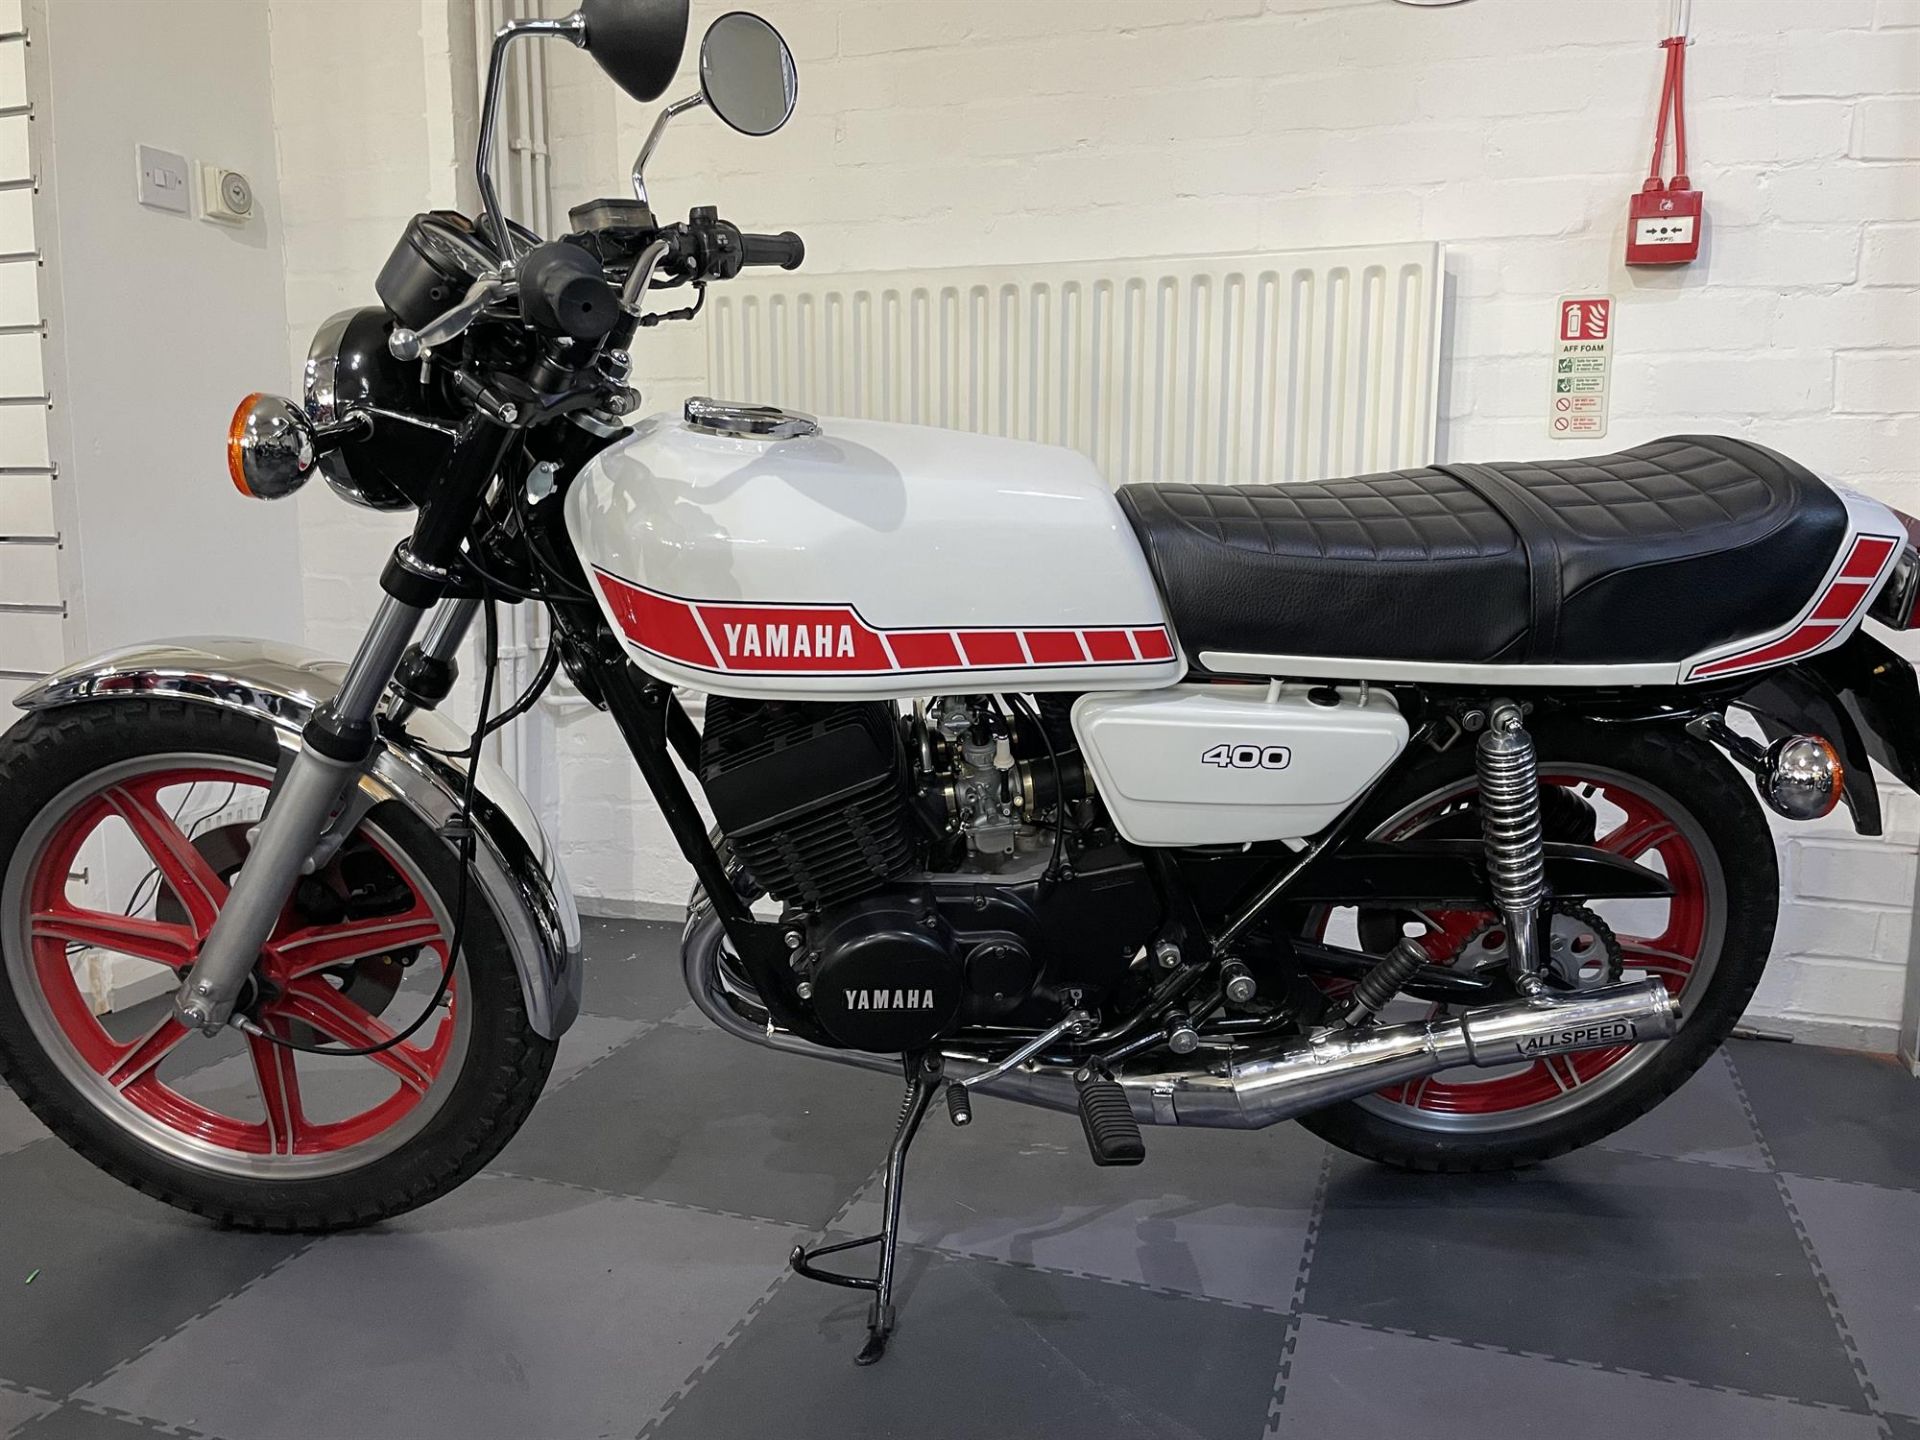 1978 Yamaha RD400E 400cc - Image 2 of 10